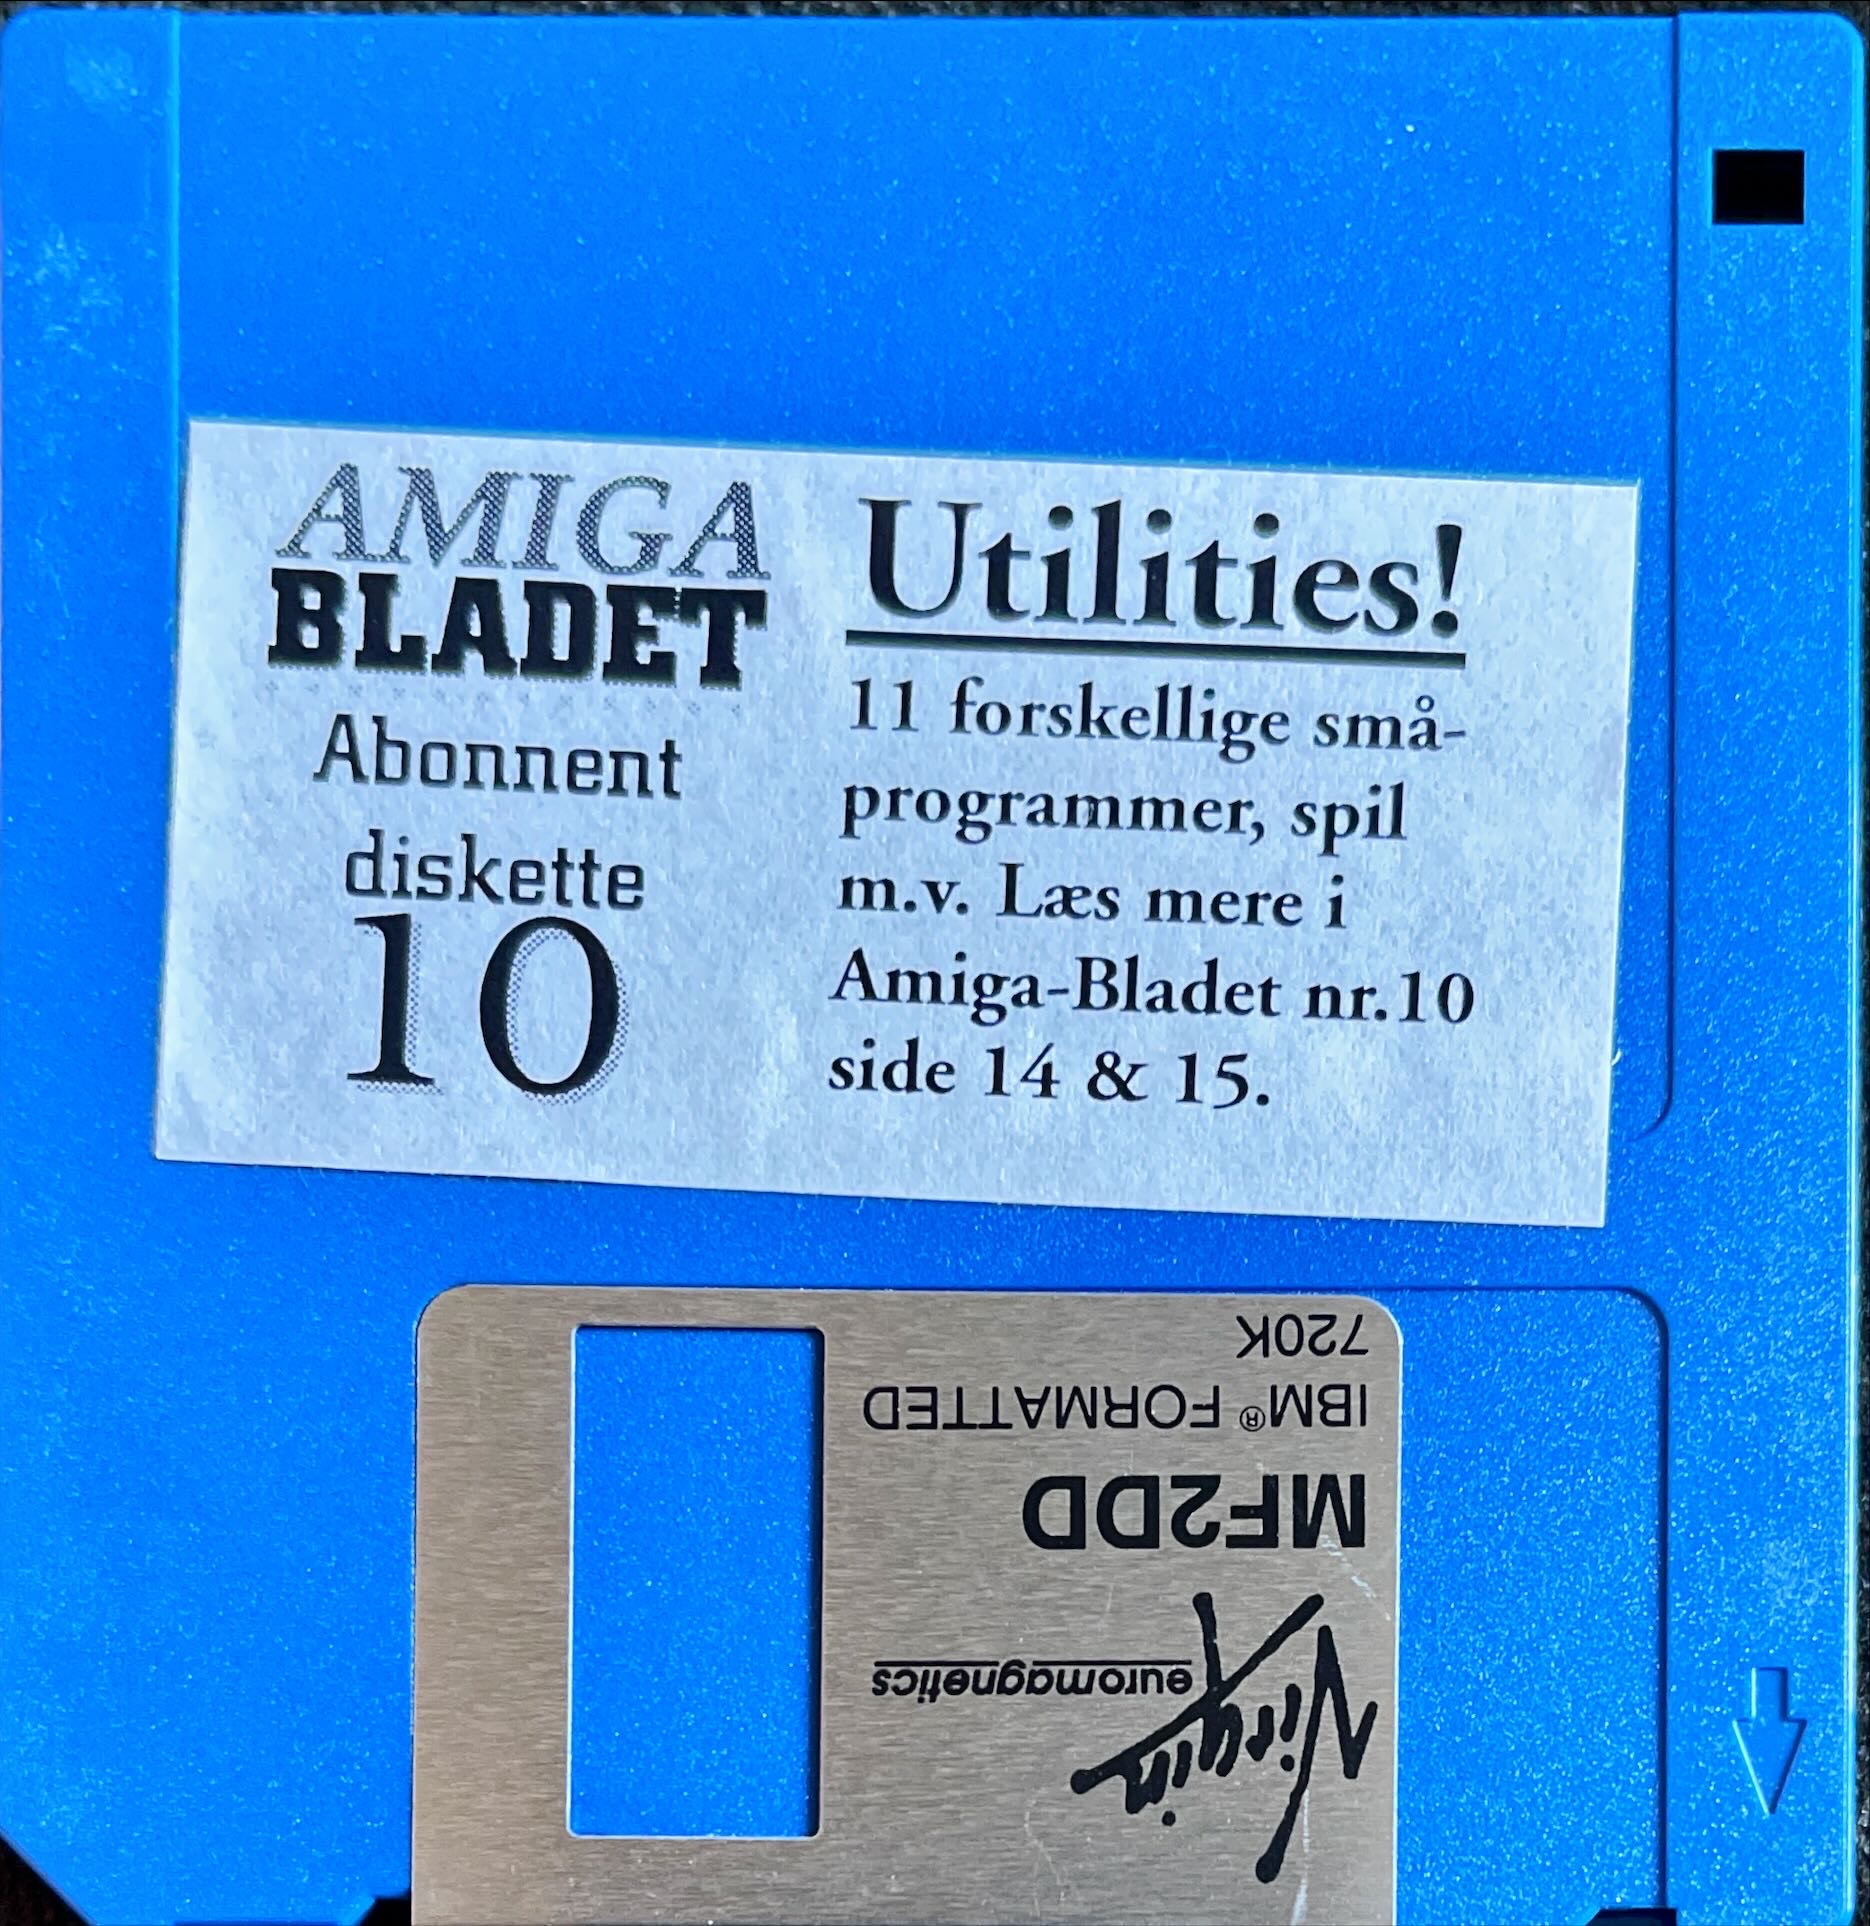 Amiga Bladet 10